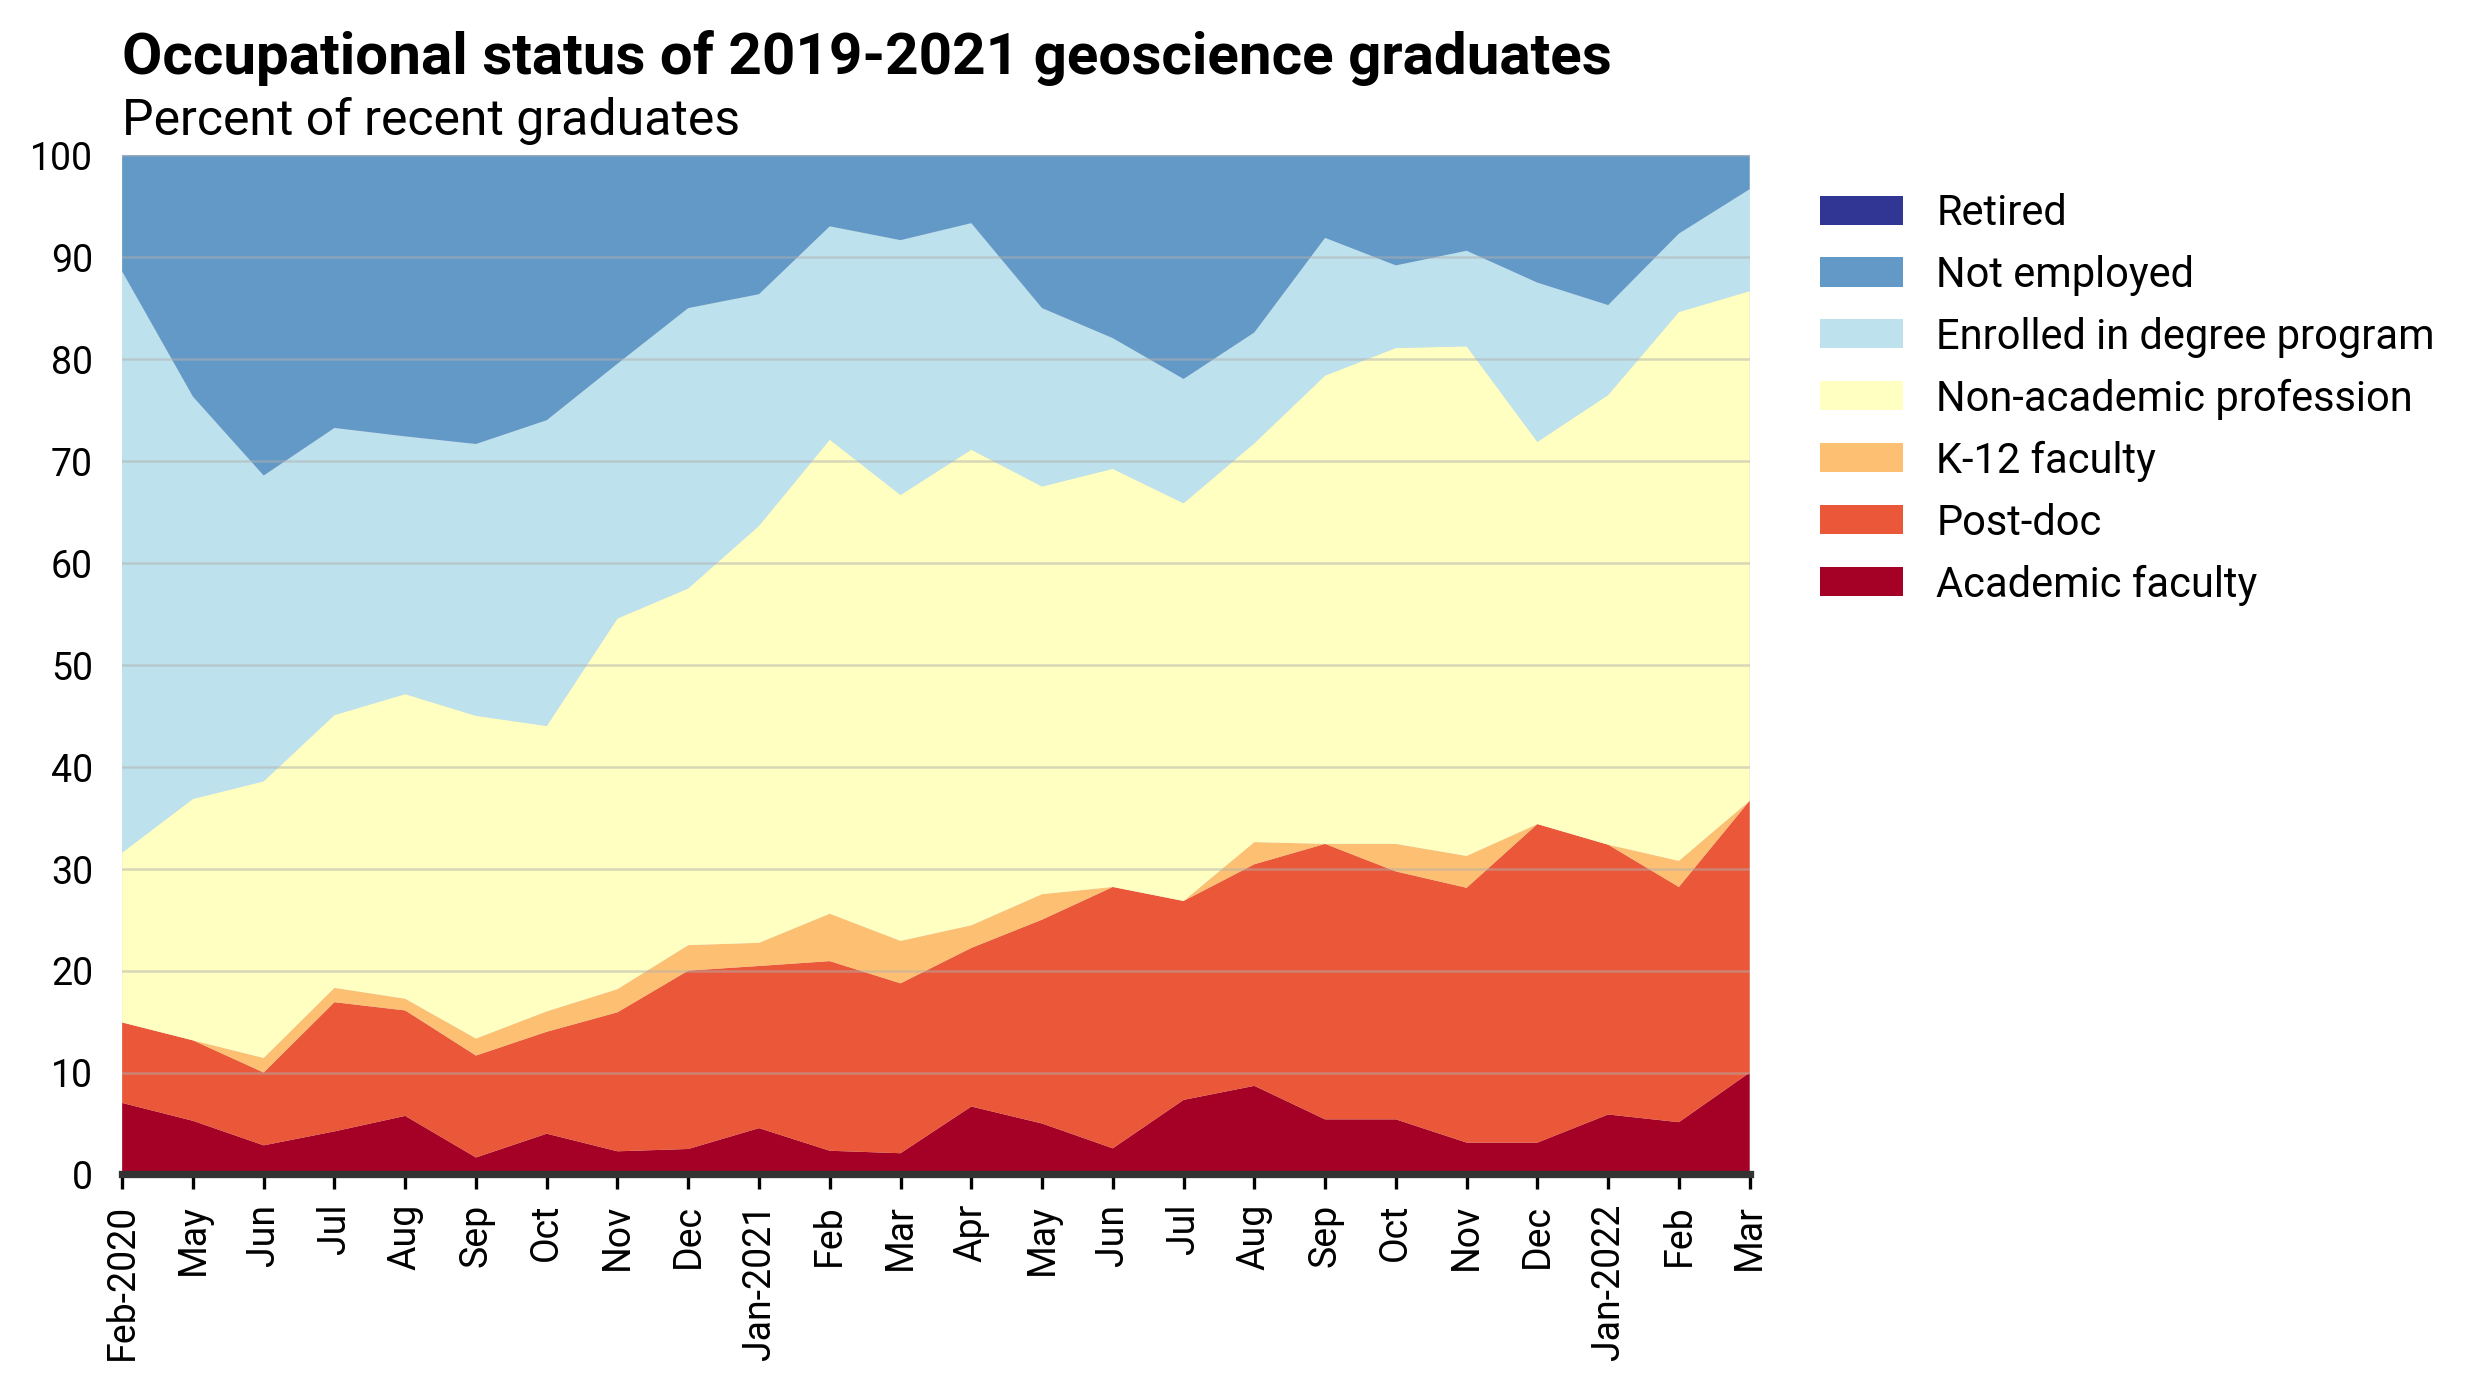 DB_2022-005 chart 03: Occupational status of 2019-2021 geoscience graduates (Credit: AGI; data from AGI's Geoscience COVID-19 Survey)